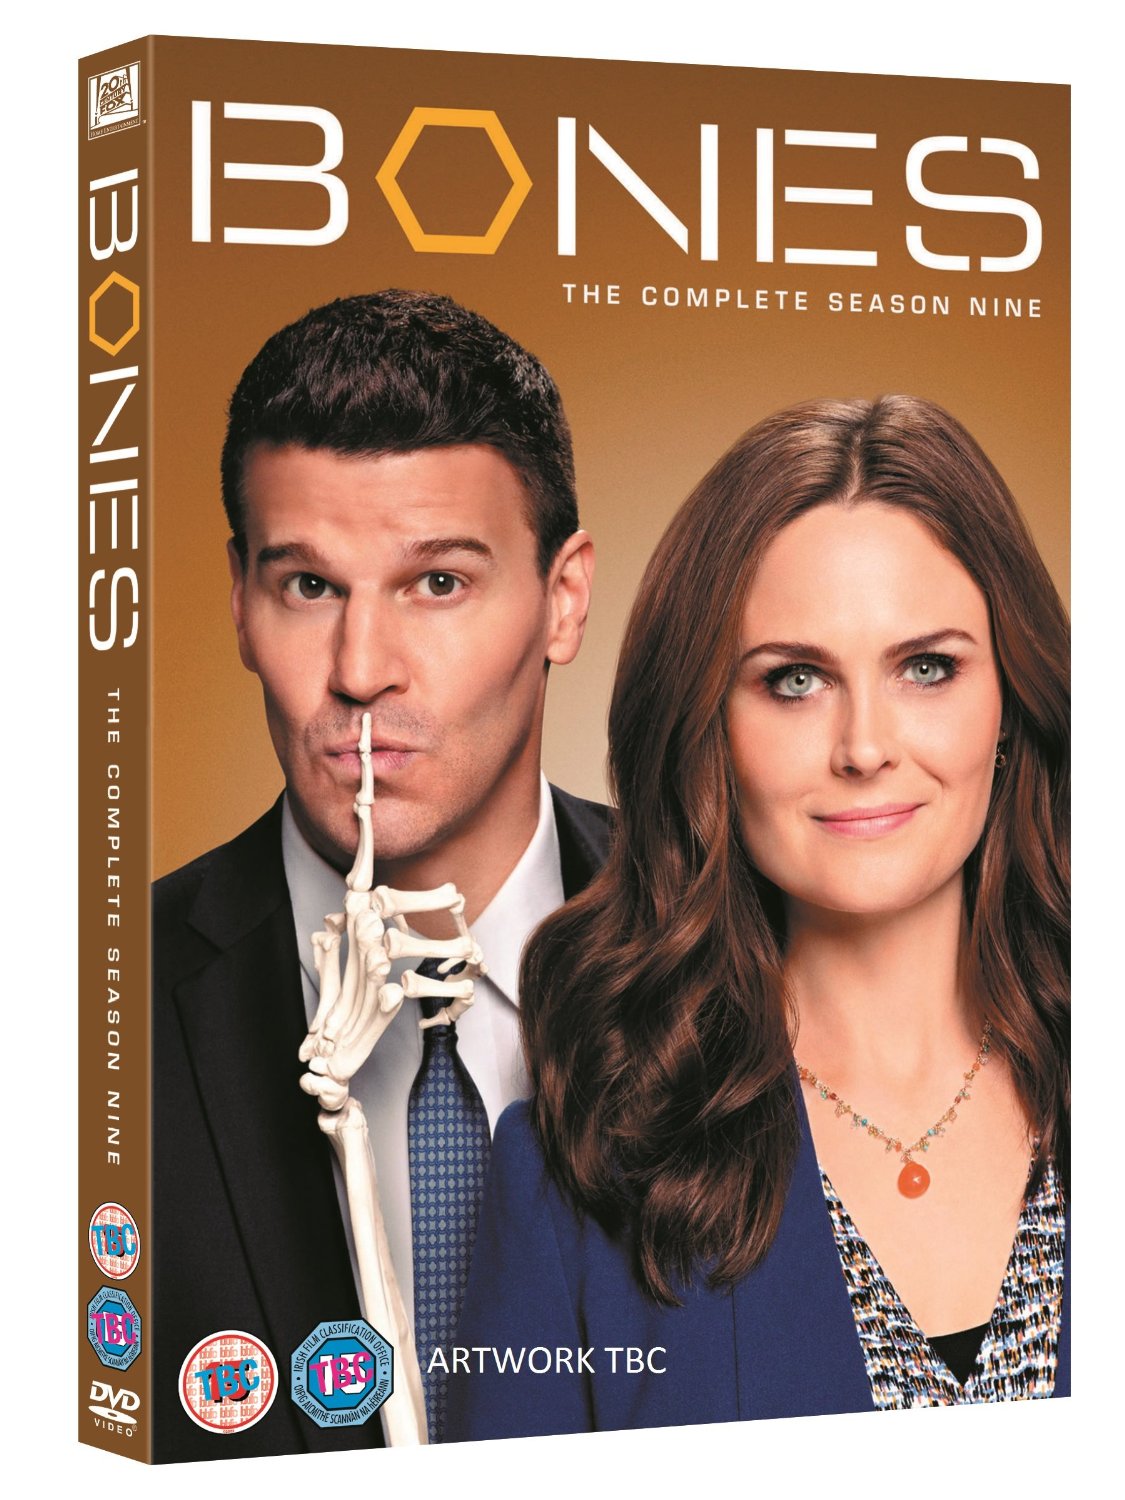 boom competitions - win a copy of Bones season 9